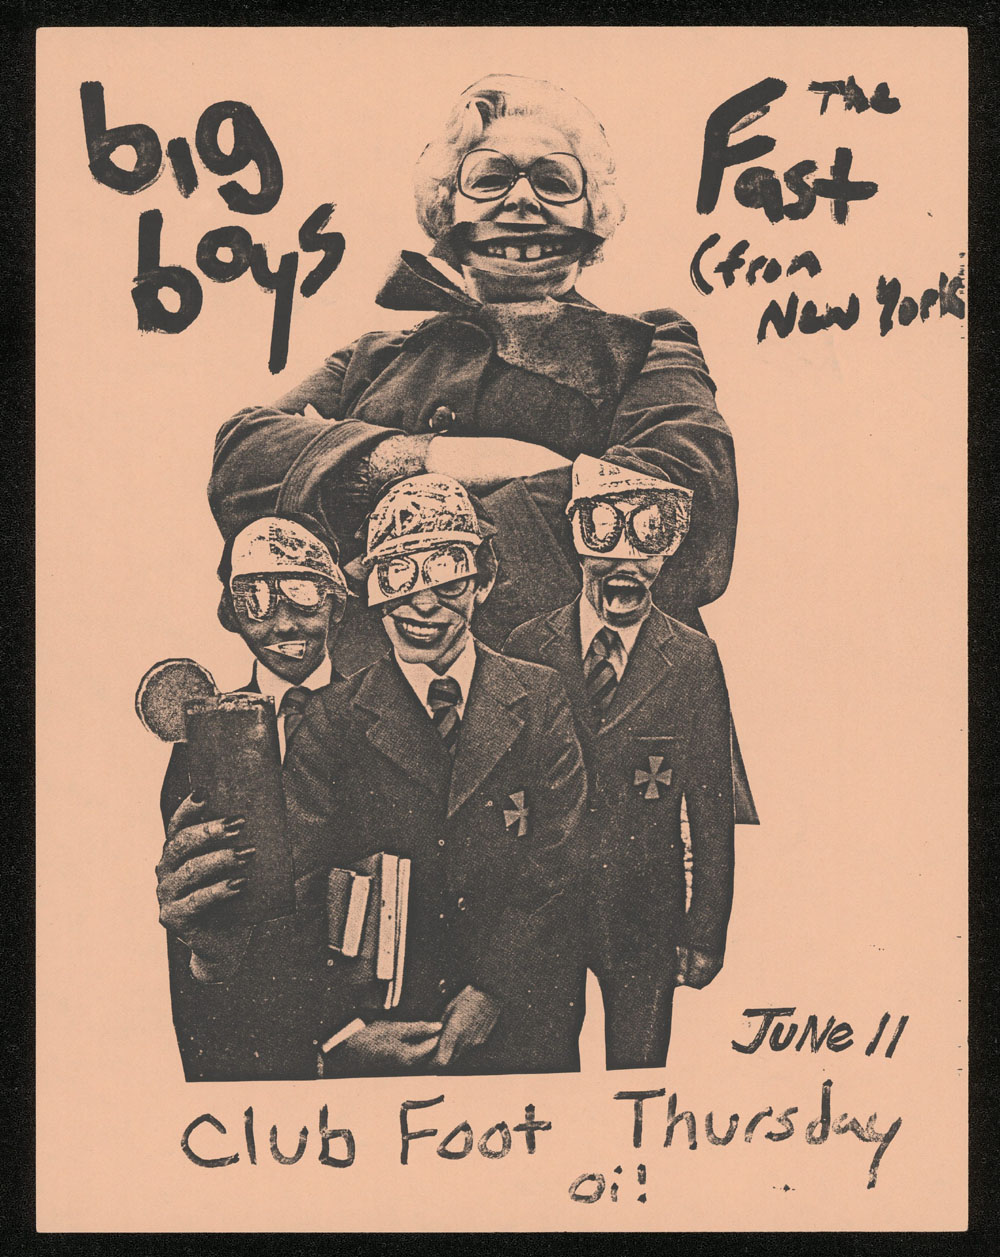 BIG BOYS w/ The Fast at Club Foot